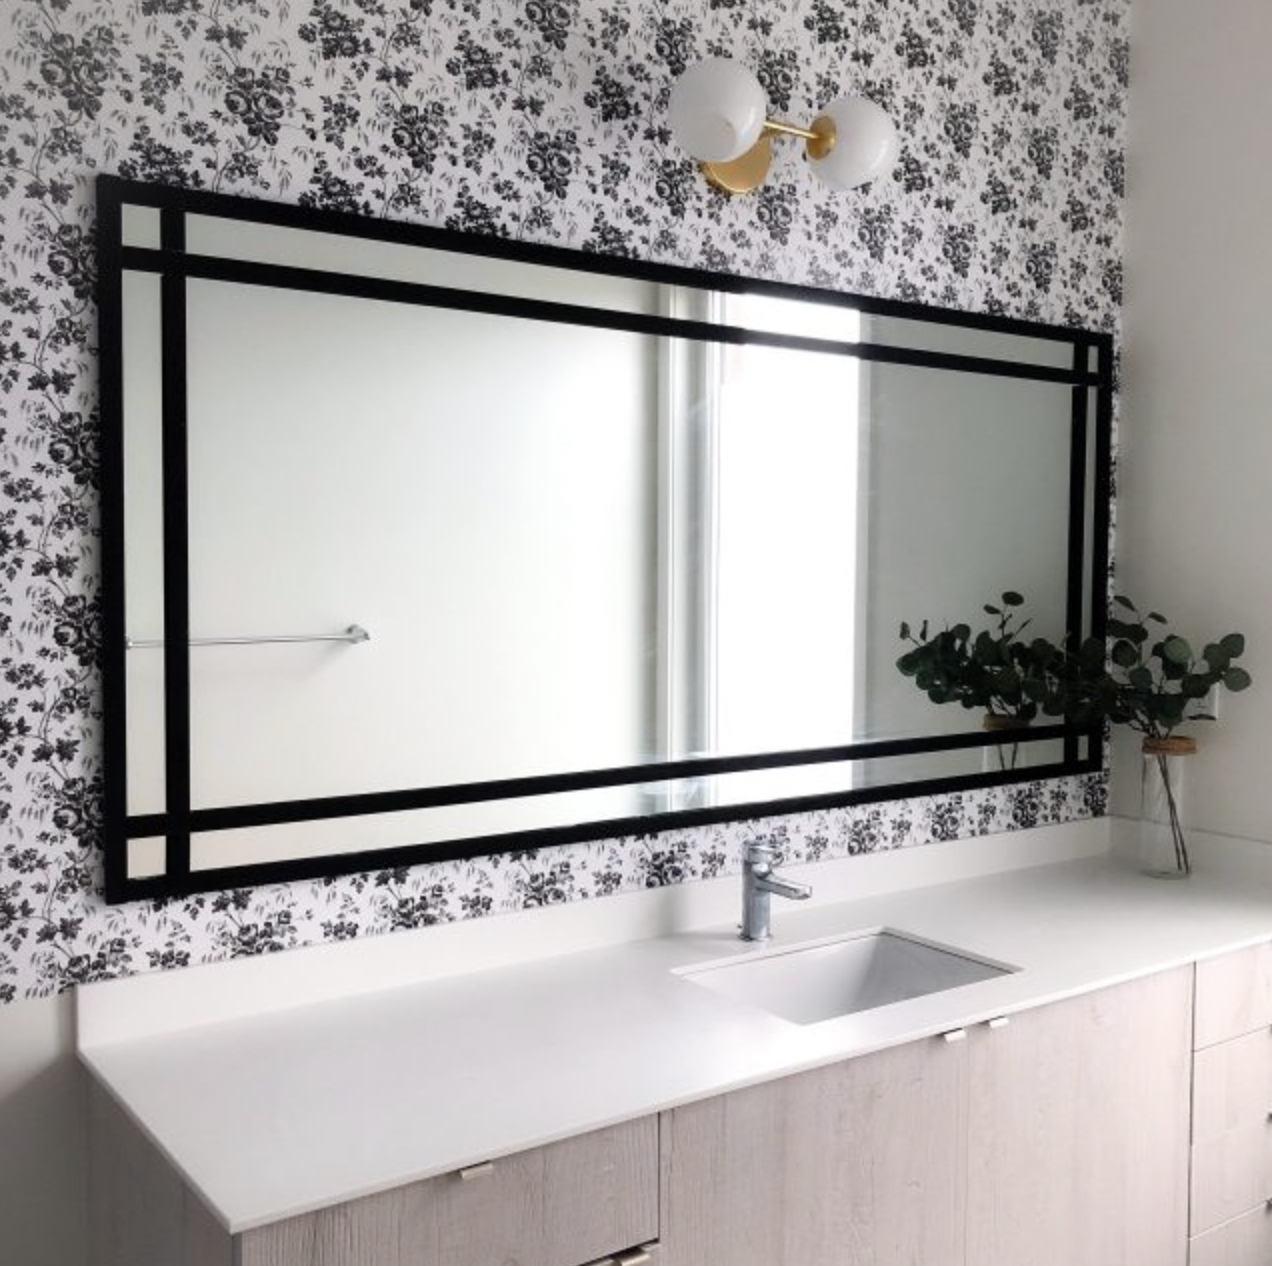  DIY Doubled Framed Mirror